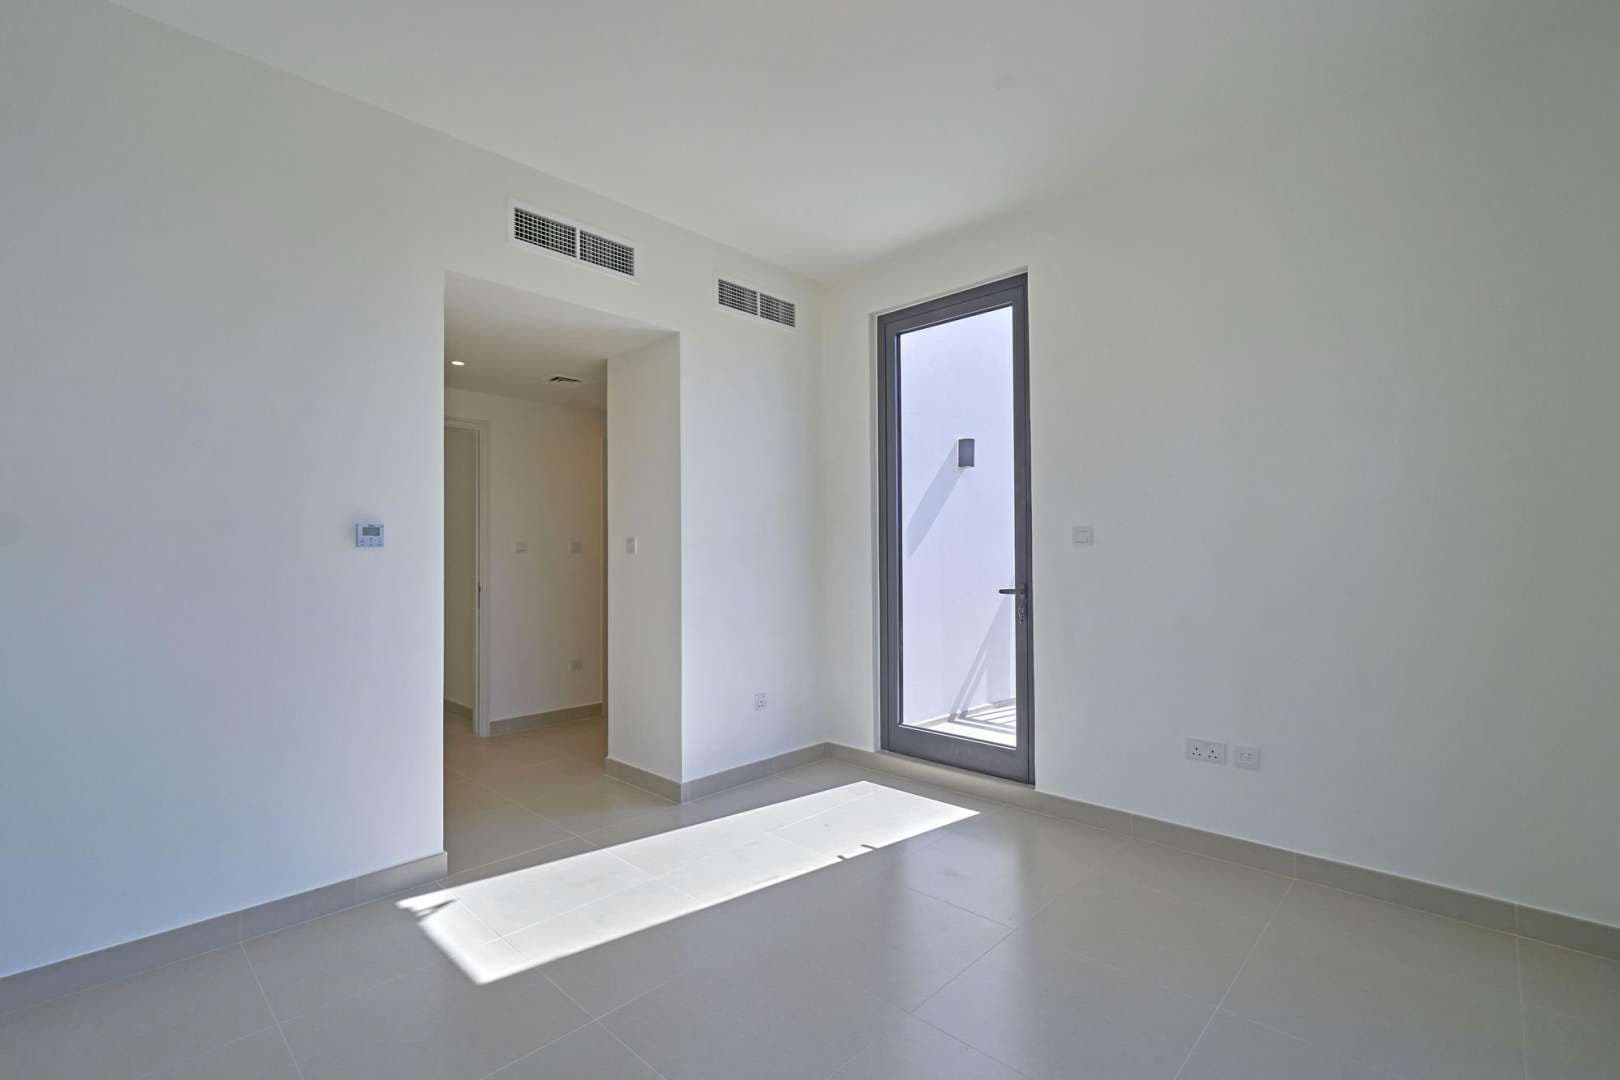 4 Bedroom Townhouse For Rent Maple At Dubai Hills Estate Lp05752 1e983a9483e6eb0.jpg